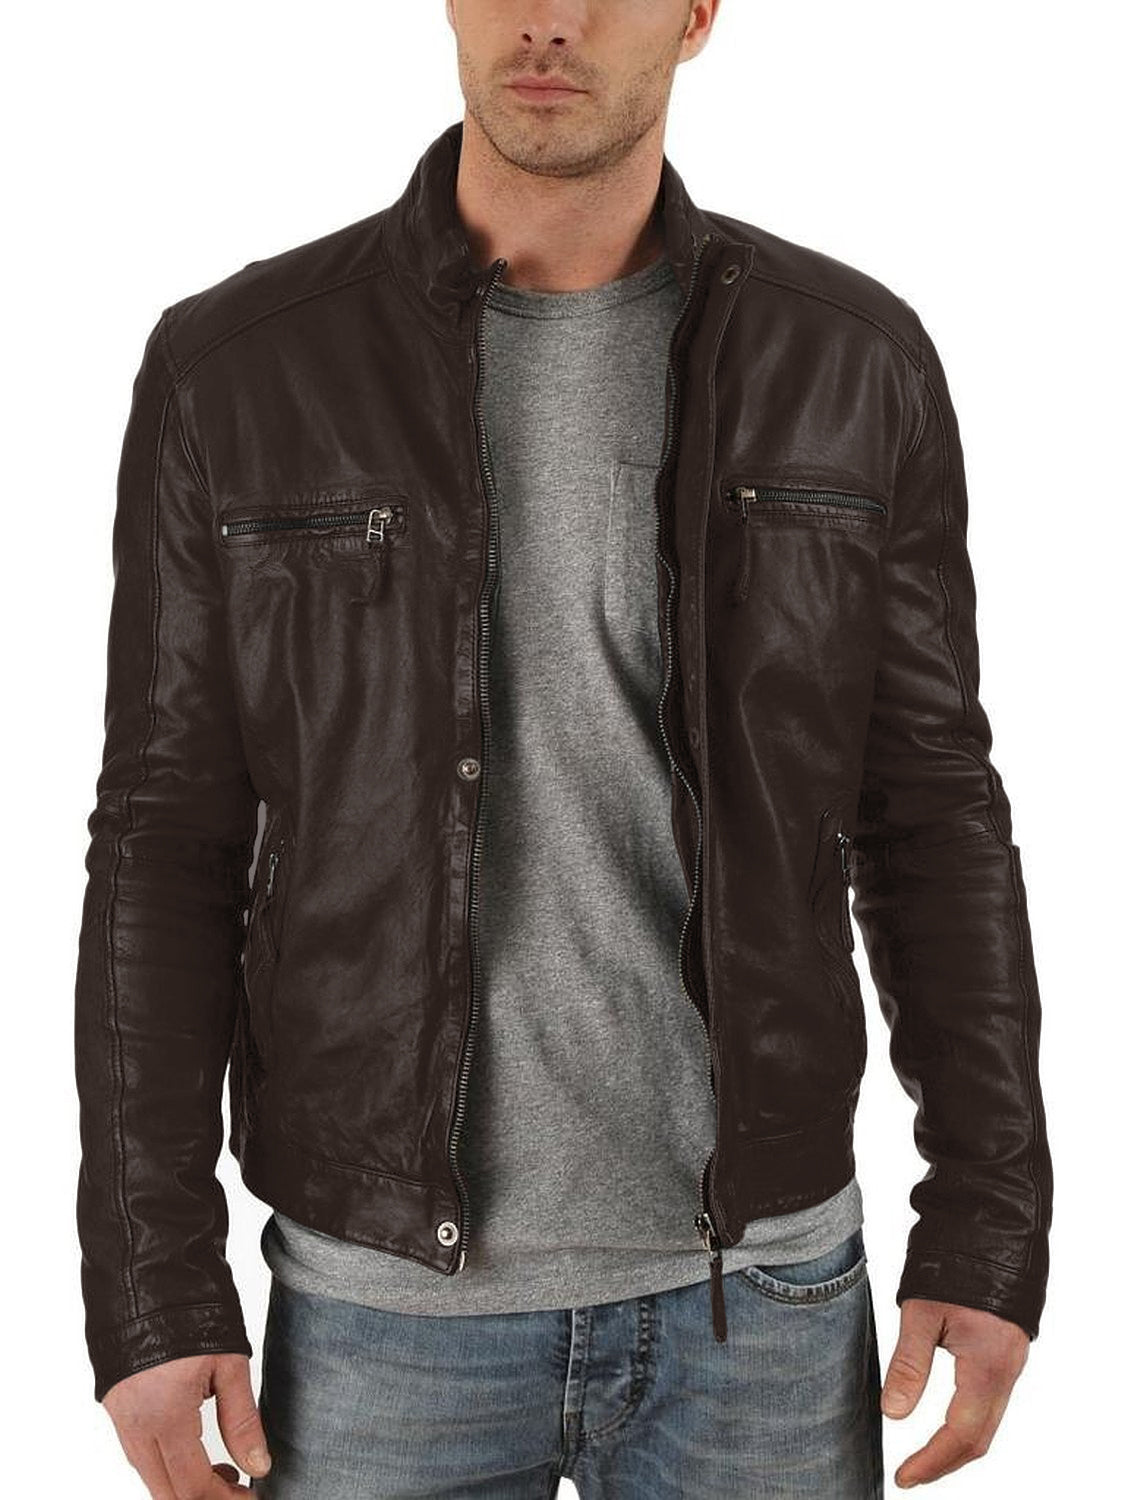 Leather Jackets Hub Mens Genuine Lambskin Leather Jacket (Black, Racer Jacket) - 1501179